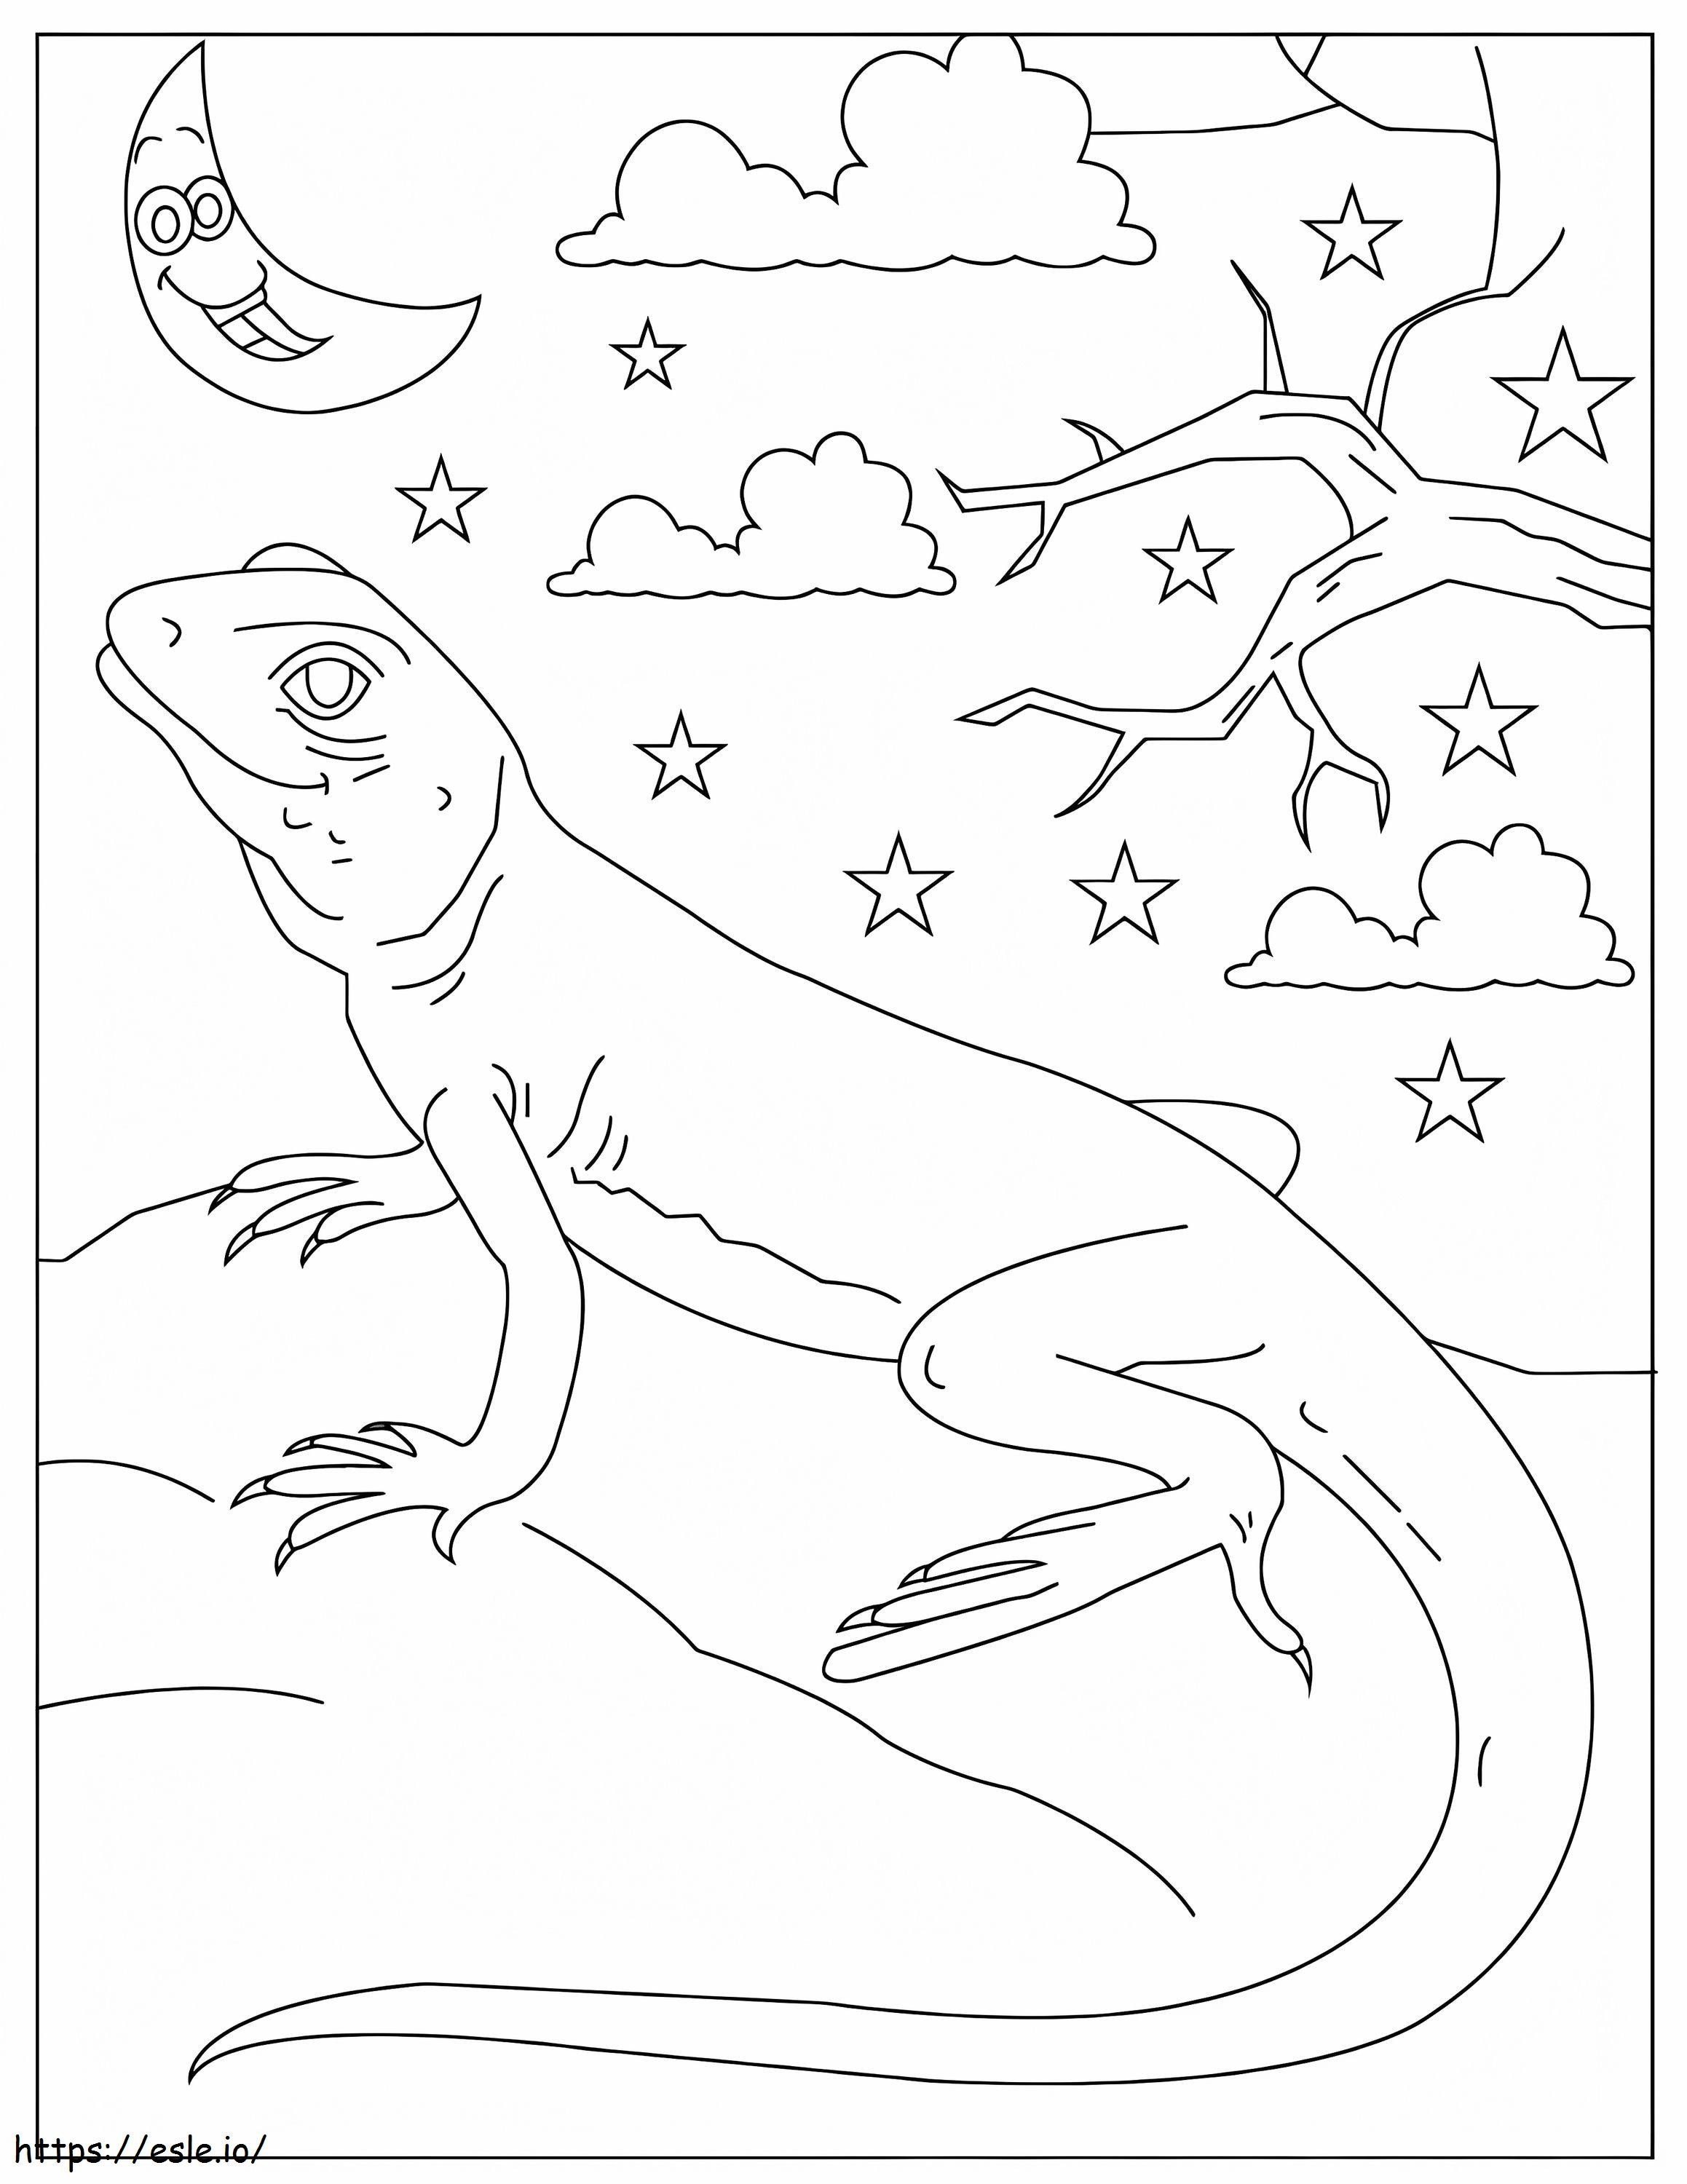 Printable Lizard coloring page